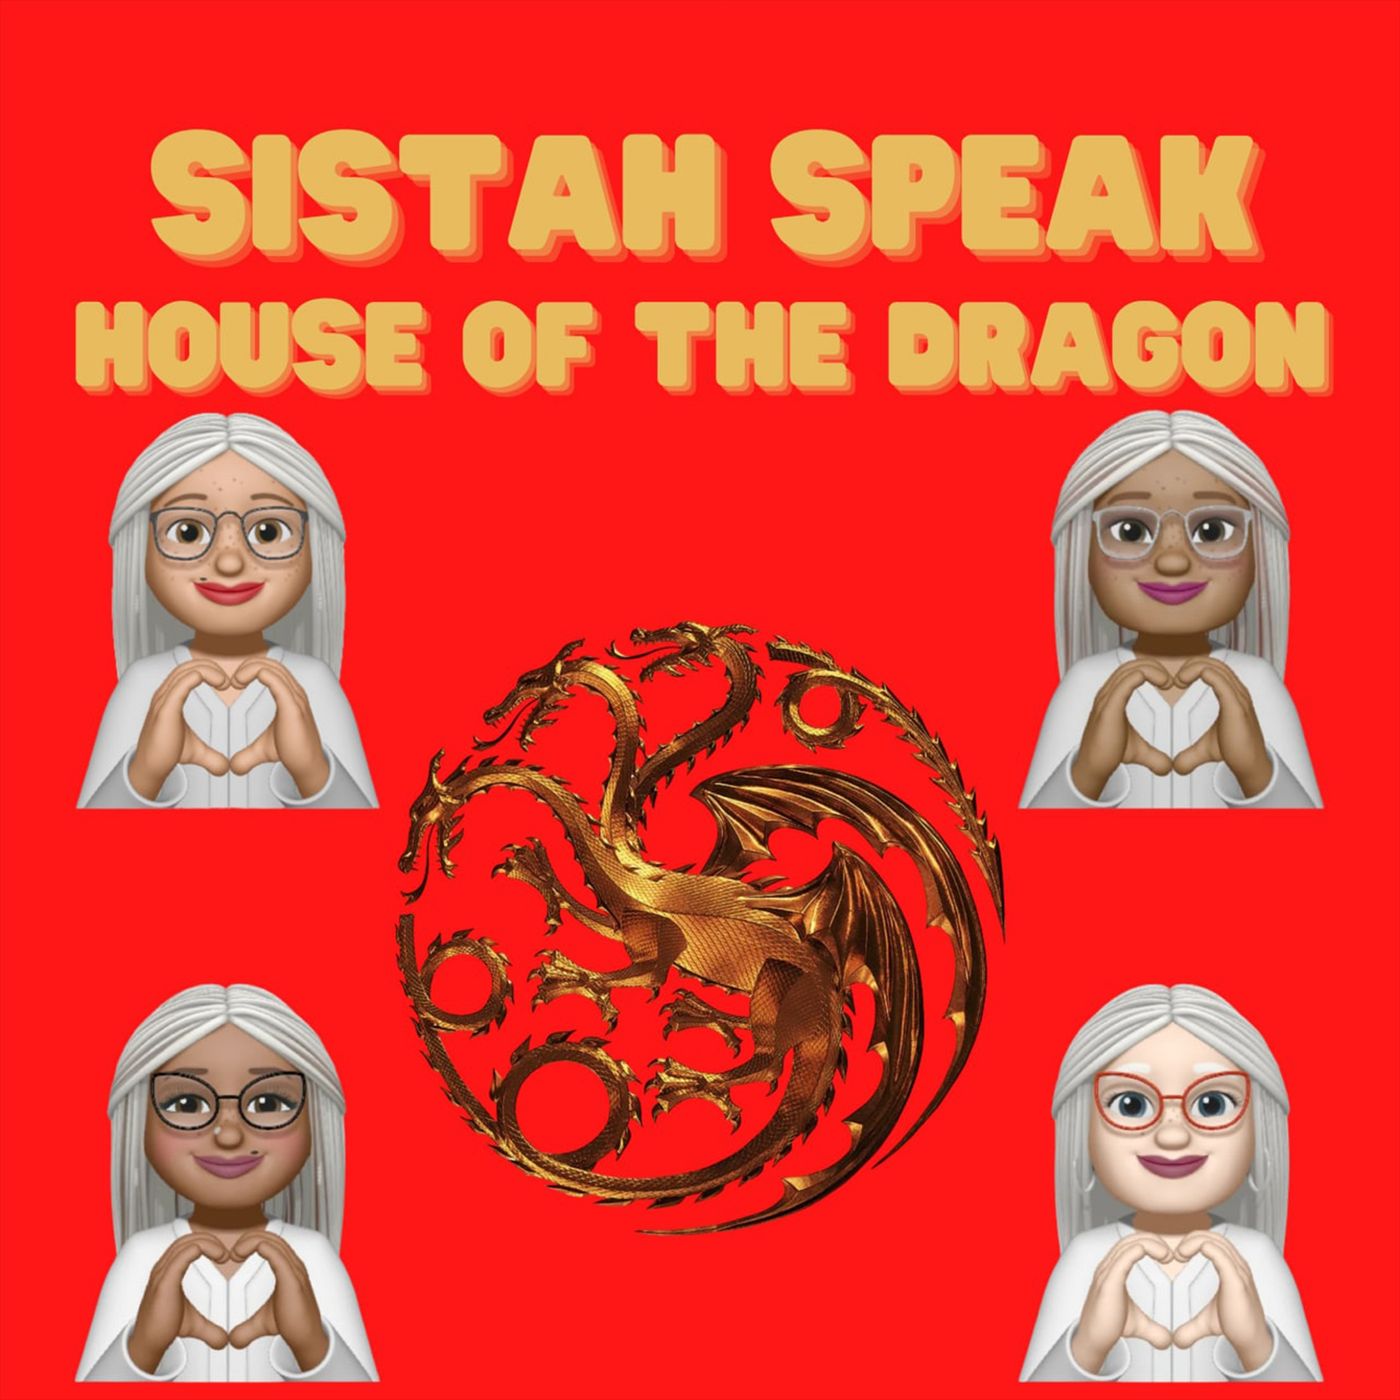 Sistah Speak House of the Dragon Promo